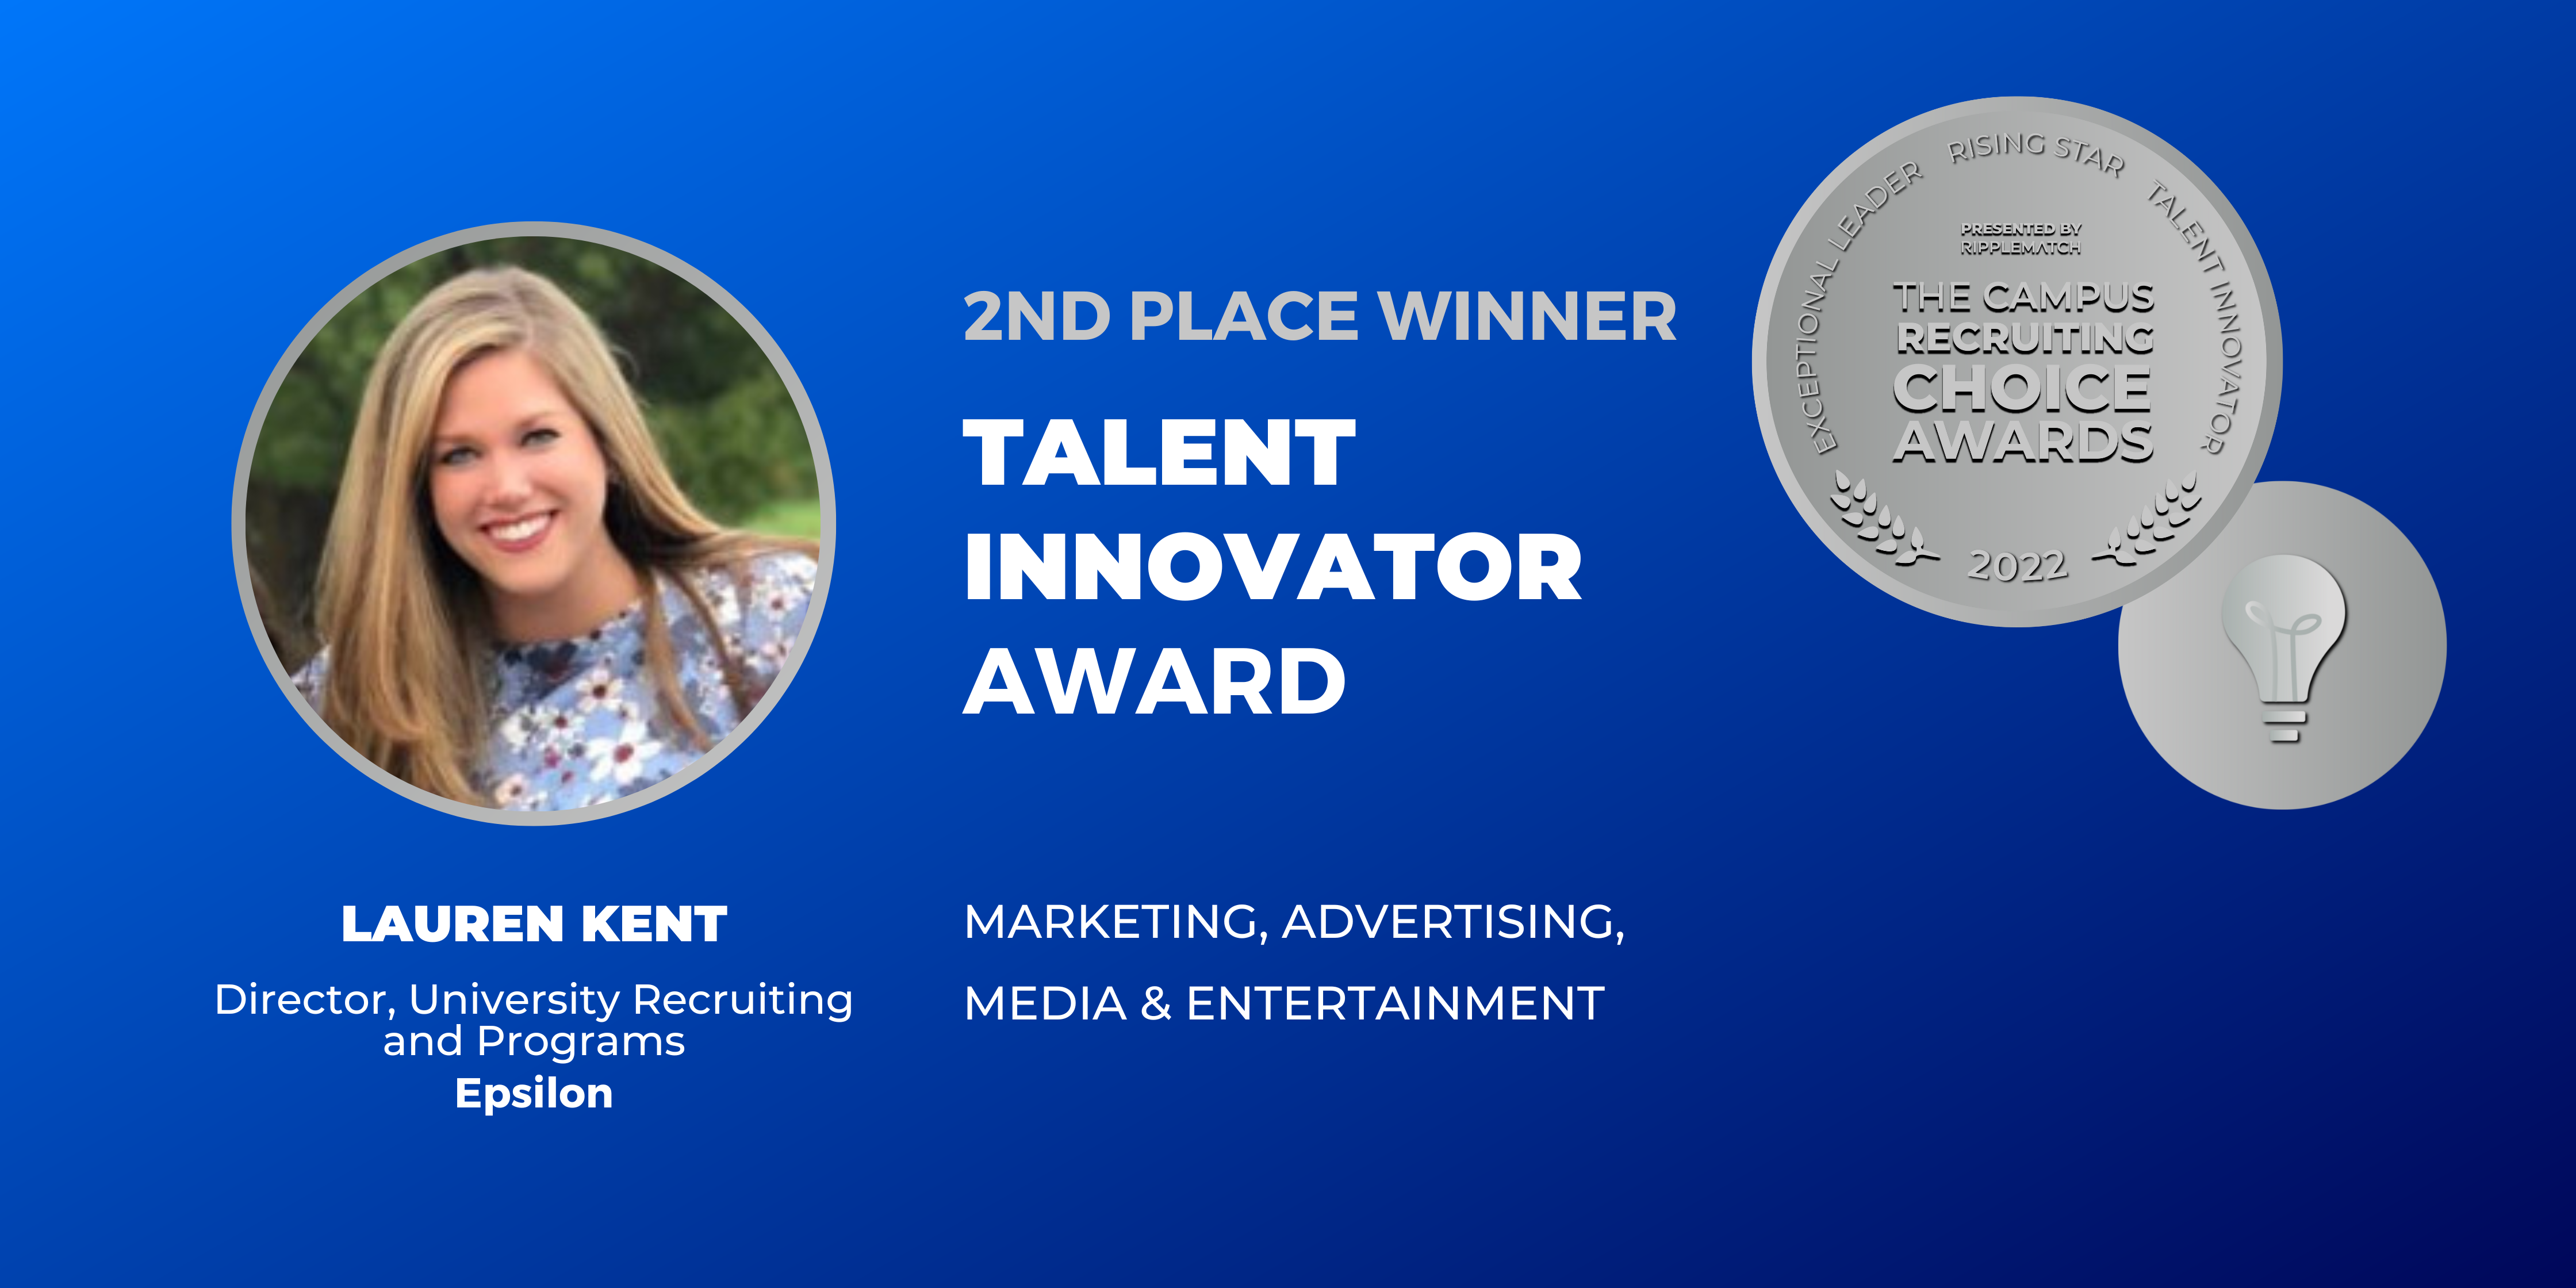 TALENT INNOVATOR - 2nd place - Marketing, Advertising, Media & Entertainment - Lauren Kent